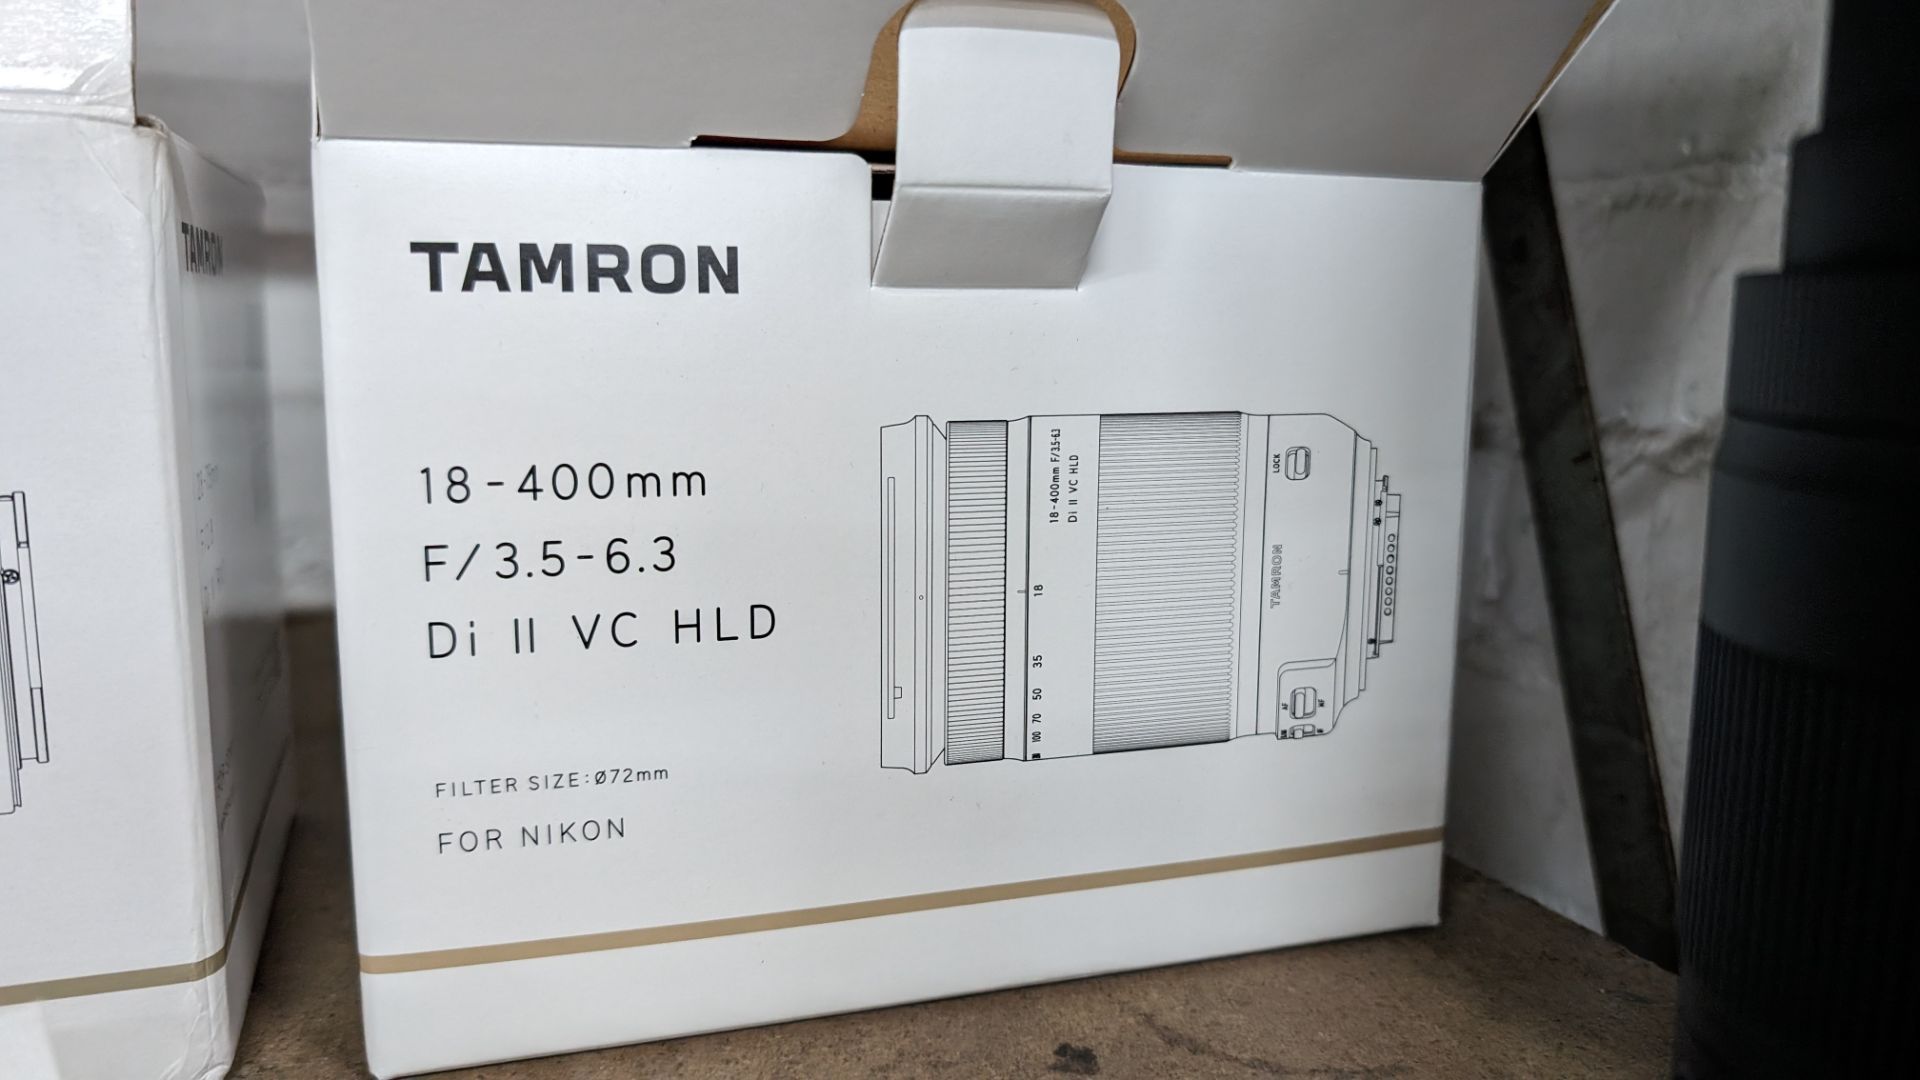 Tamron 18-400mm lens, f/3.5-6.3, Di II VC HLD. Filter size 72mm. For Nikon - Bild 4 aus 7